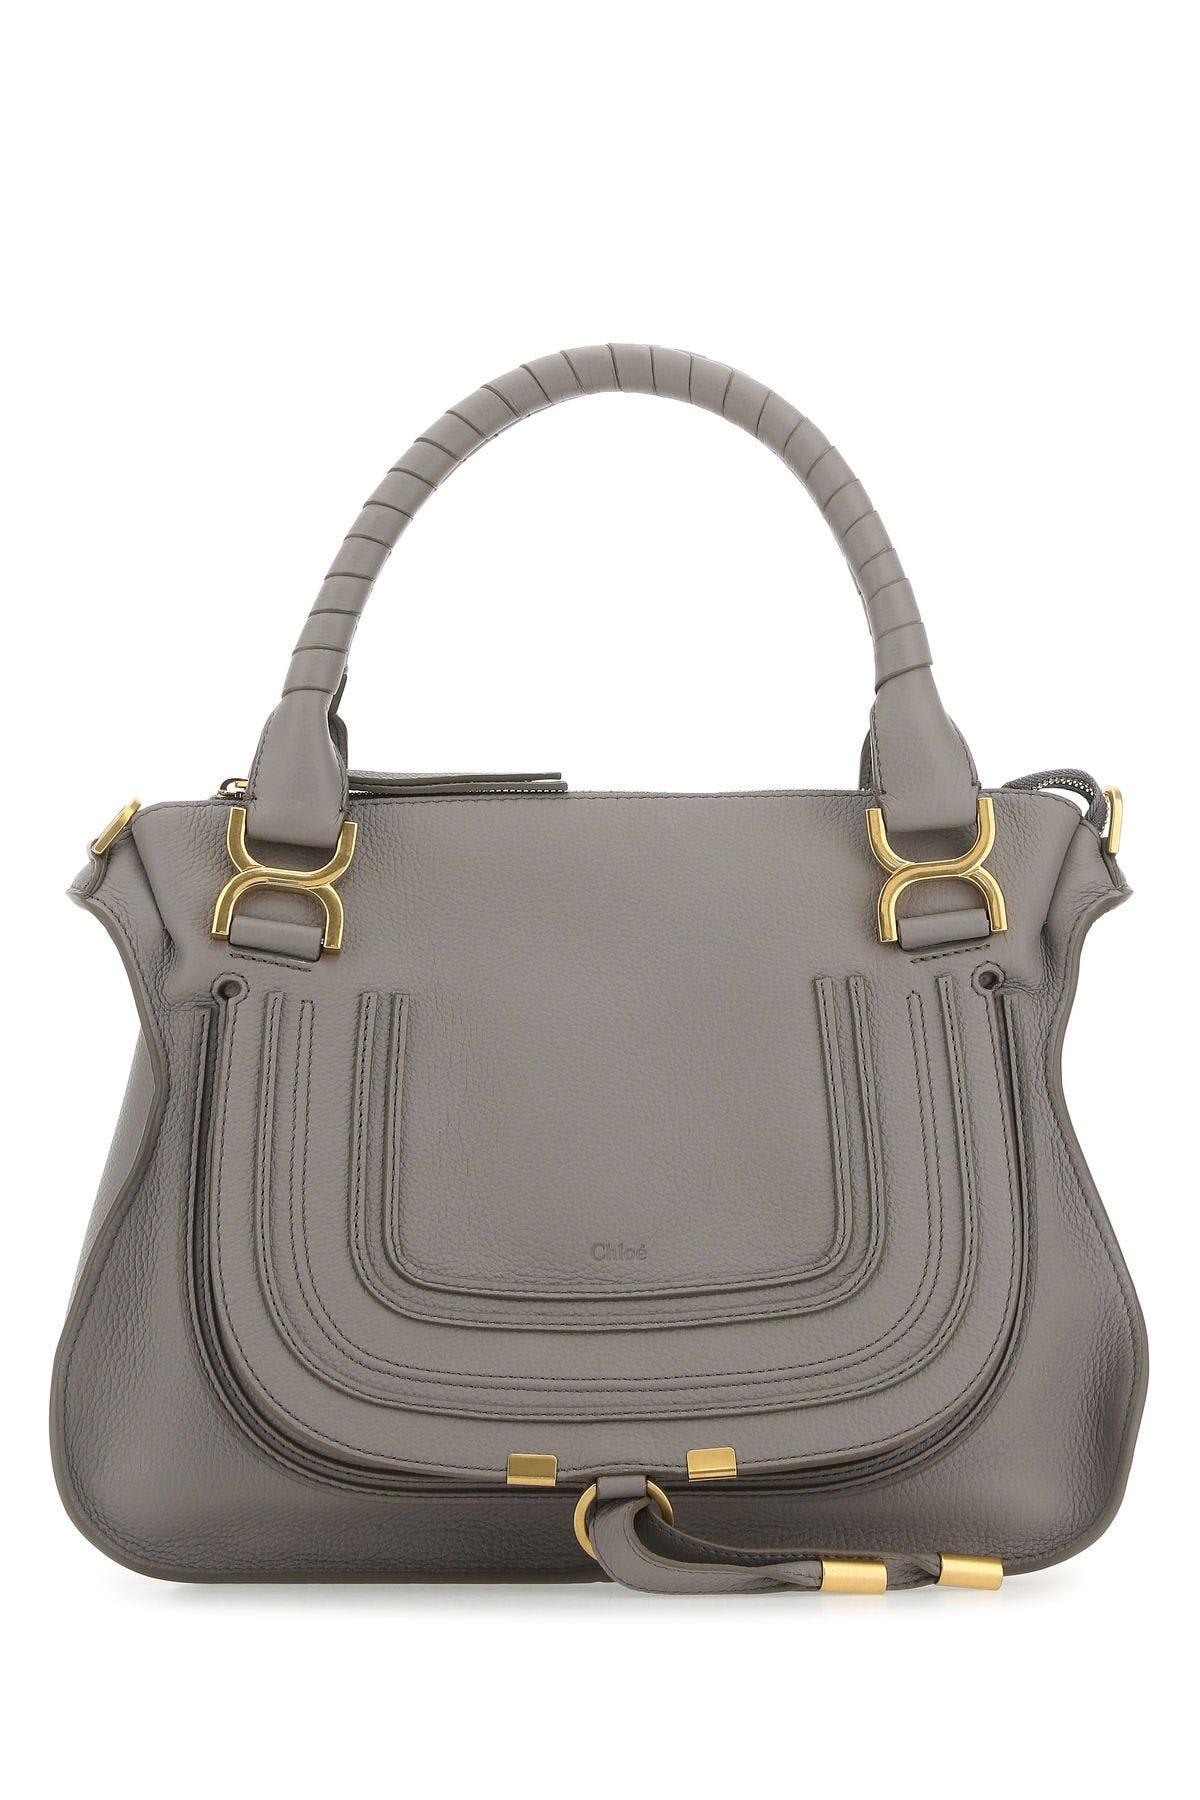 Chloé Grey Leather Medium Marcie Handbag